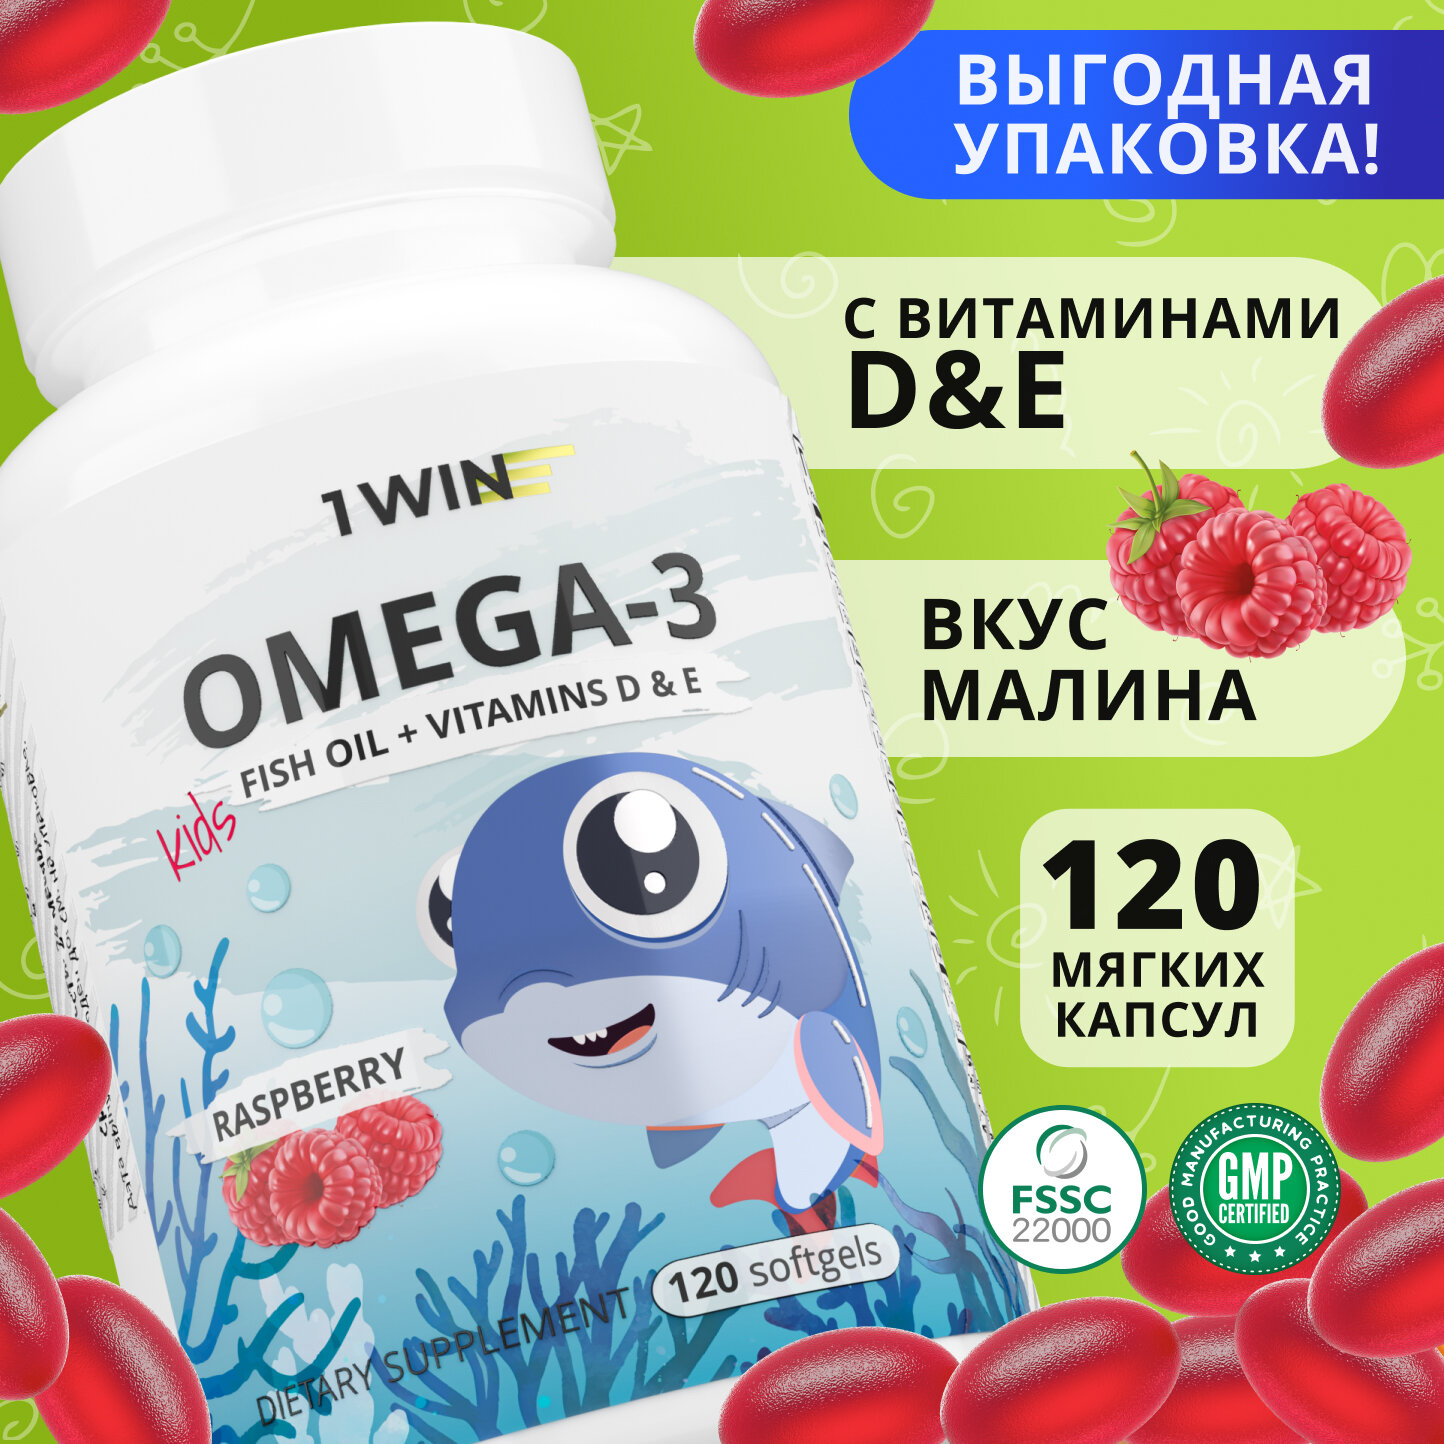 1WIN Omega-3 Kids + Vitamins D & E Детская Омега 3 с Витаминами Д и Е со вкусом апельсина 60 капсул рыбий жир